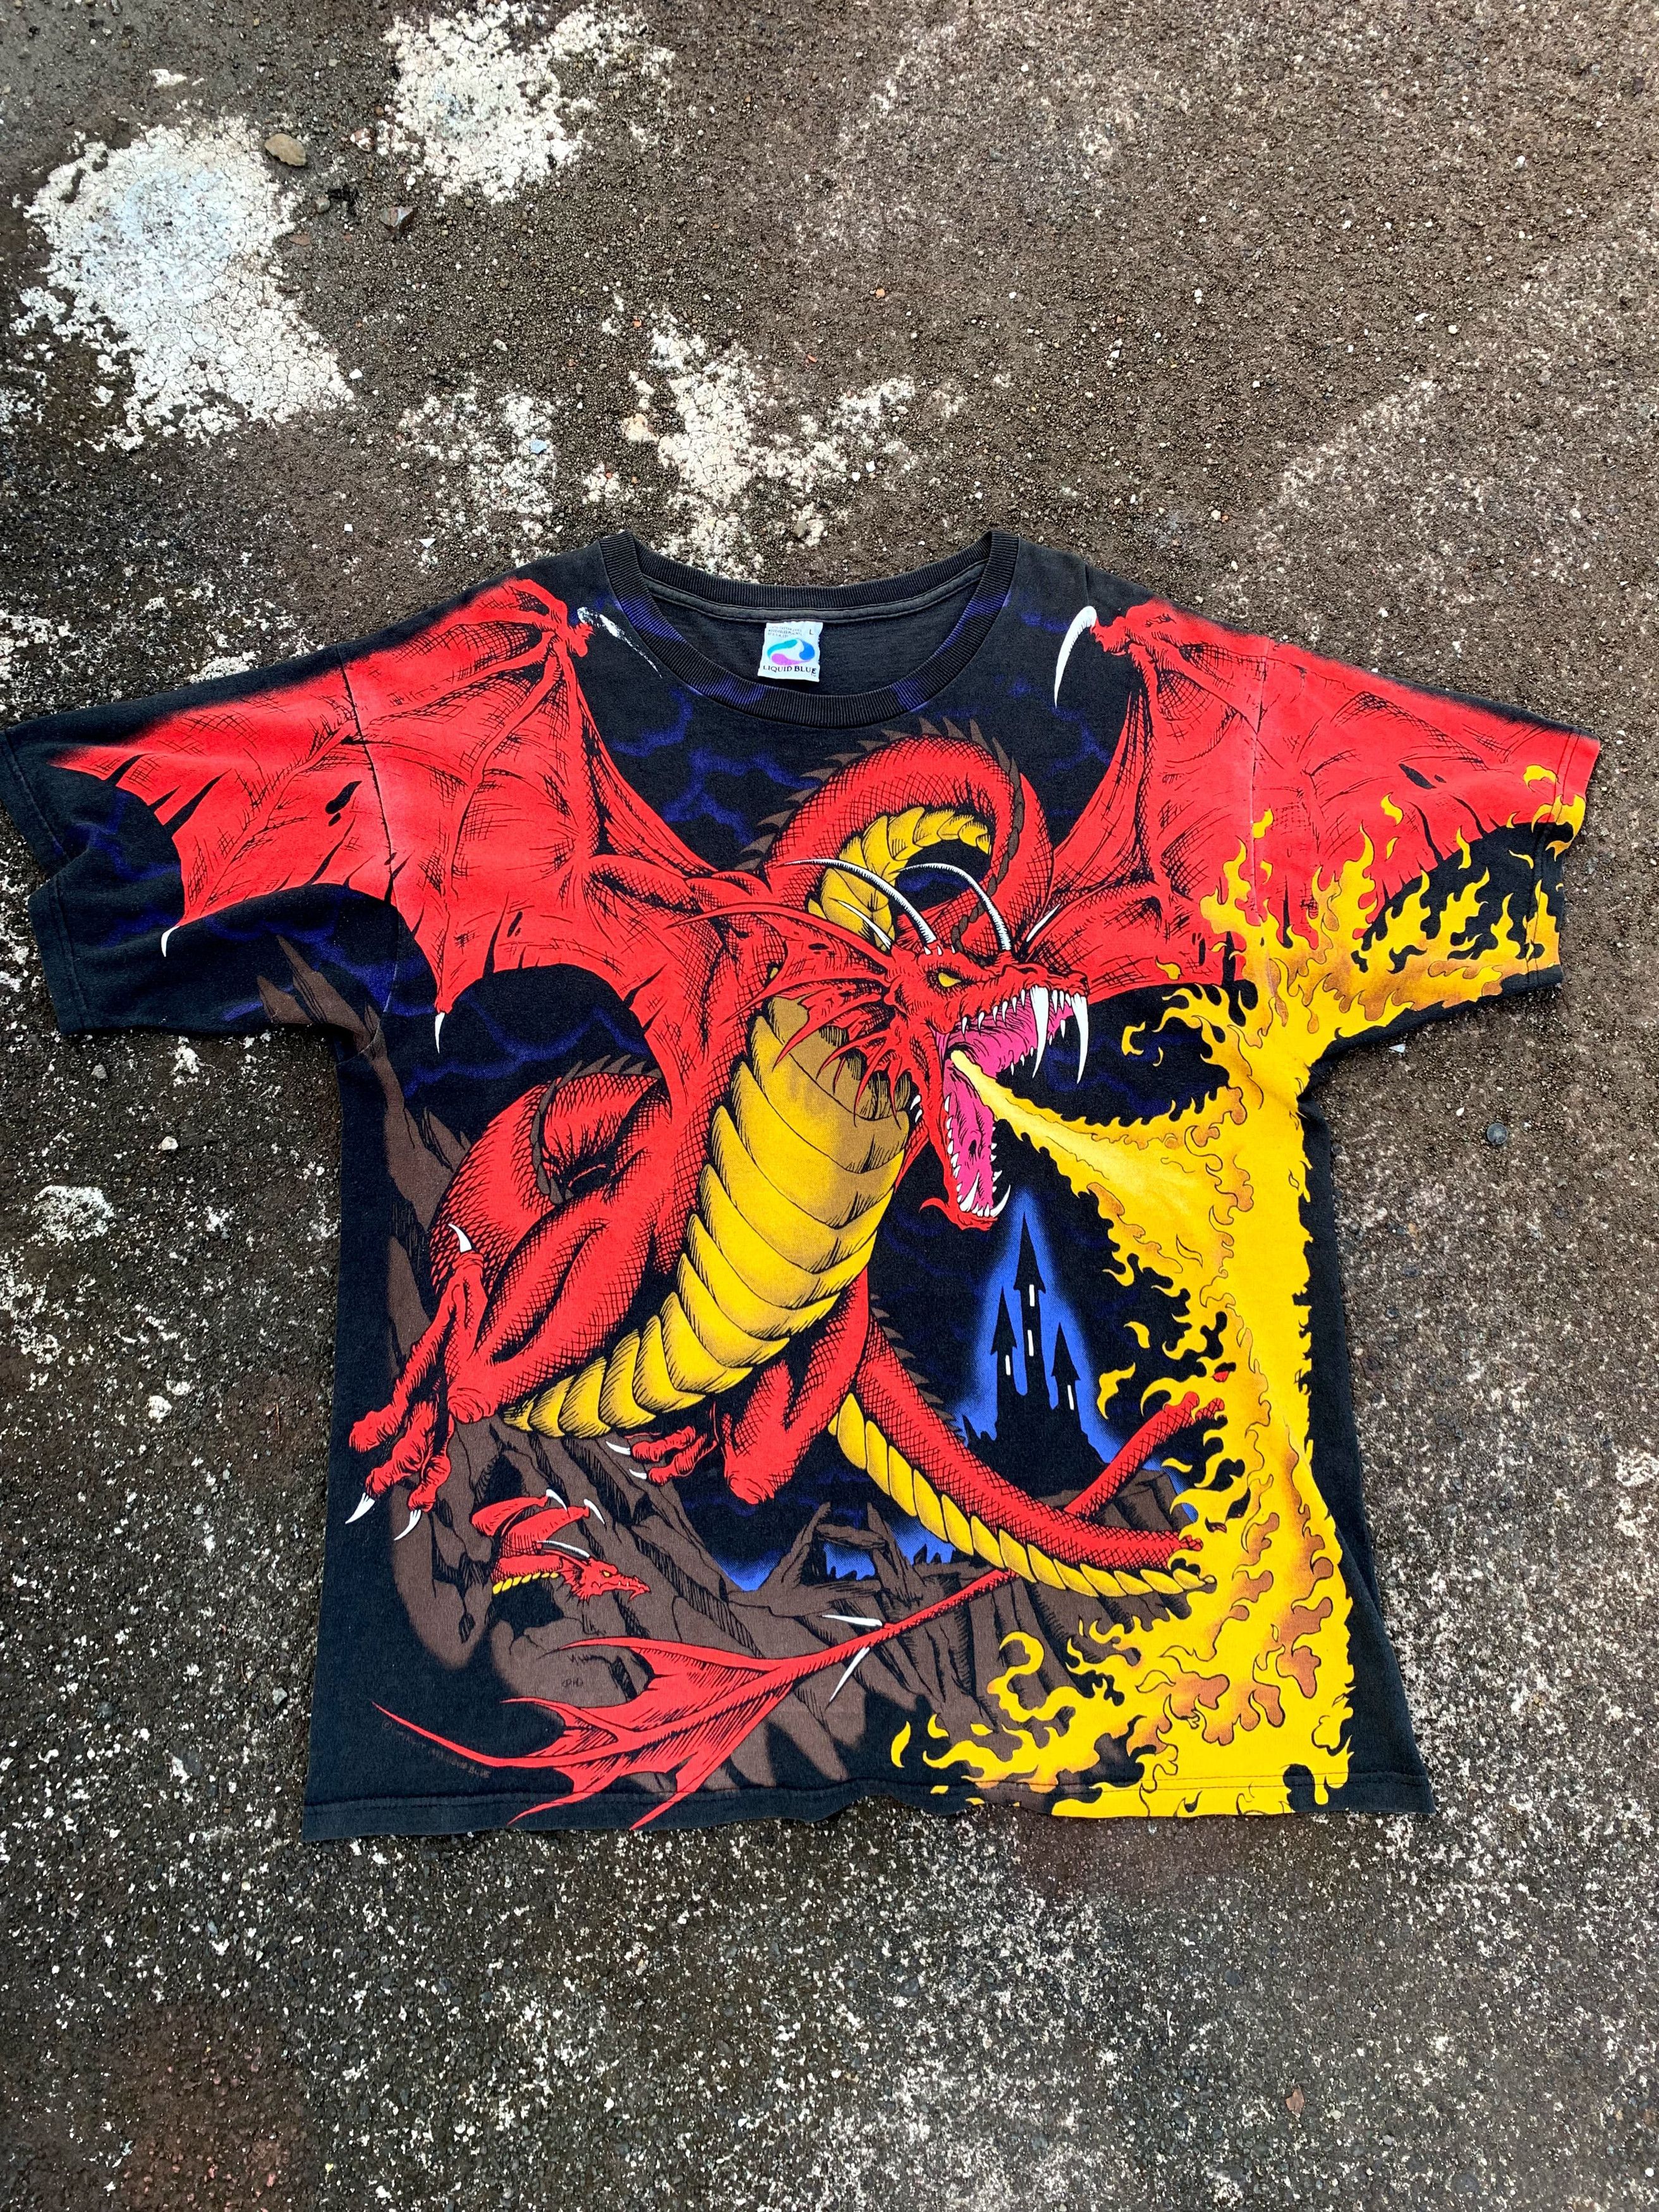 Vintage 1993 Liquid Blue Knight and Dragon T-Shirt - 1